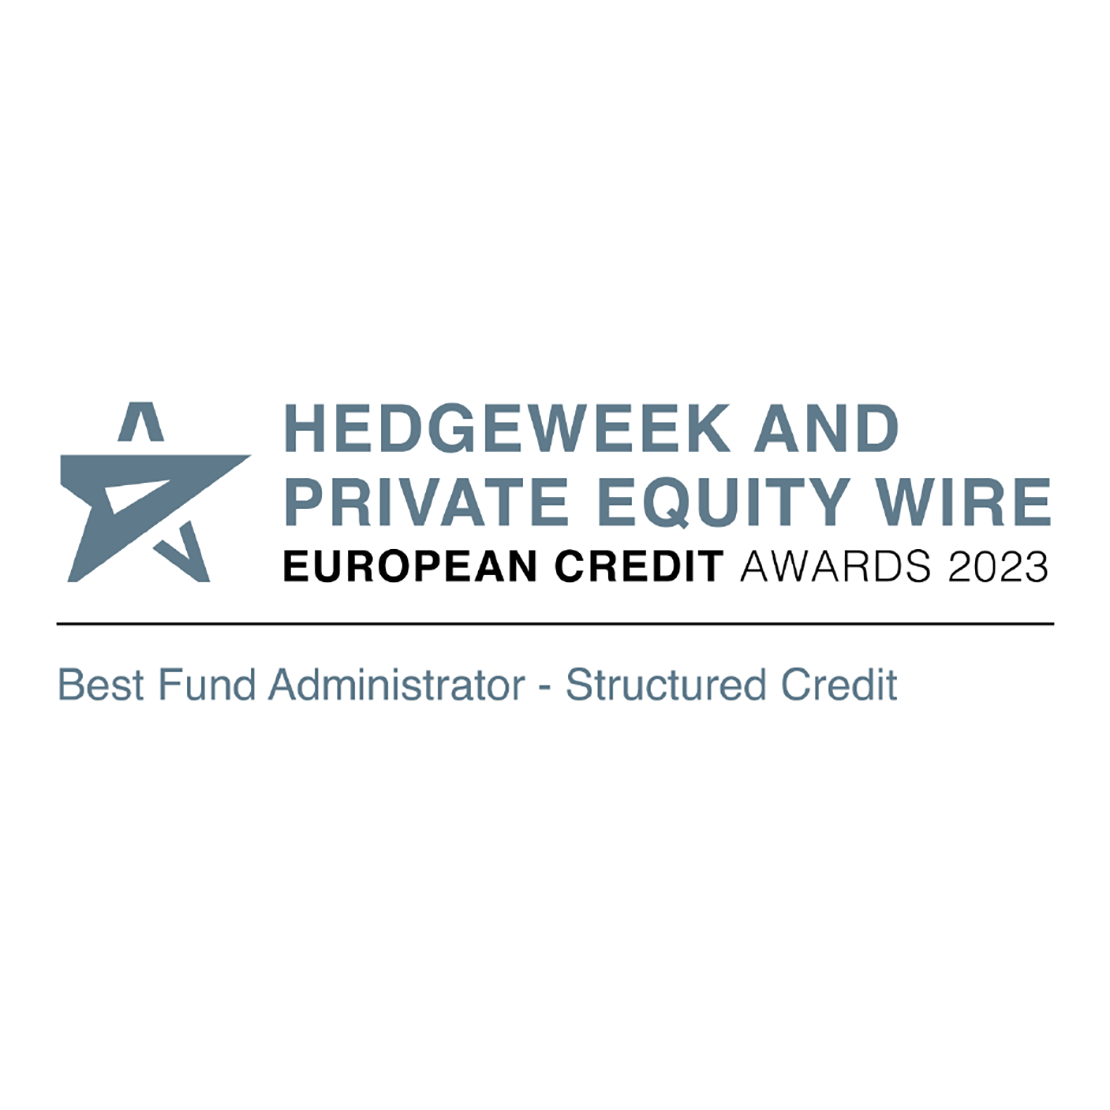 European Credit Awards 2023